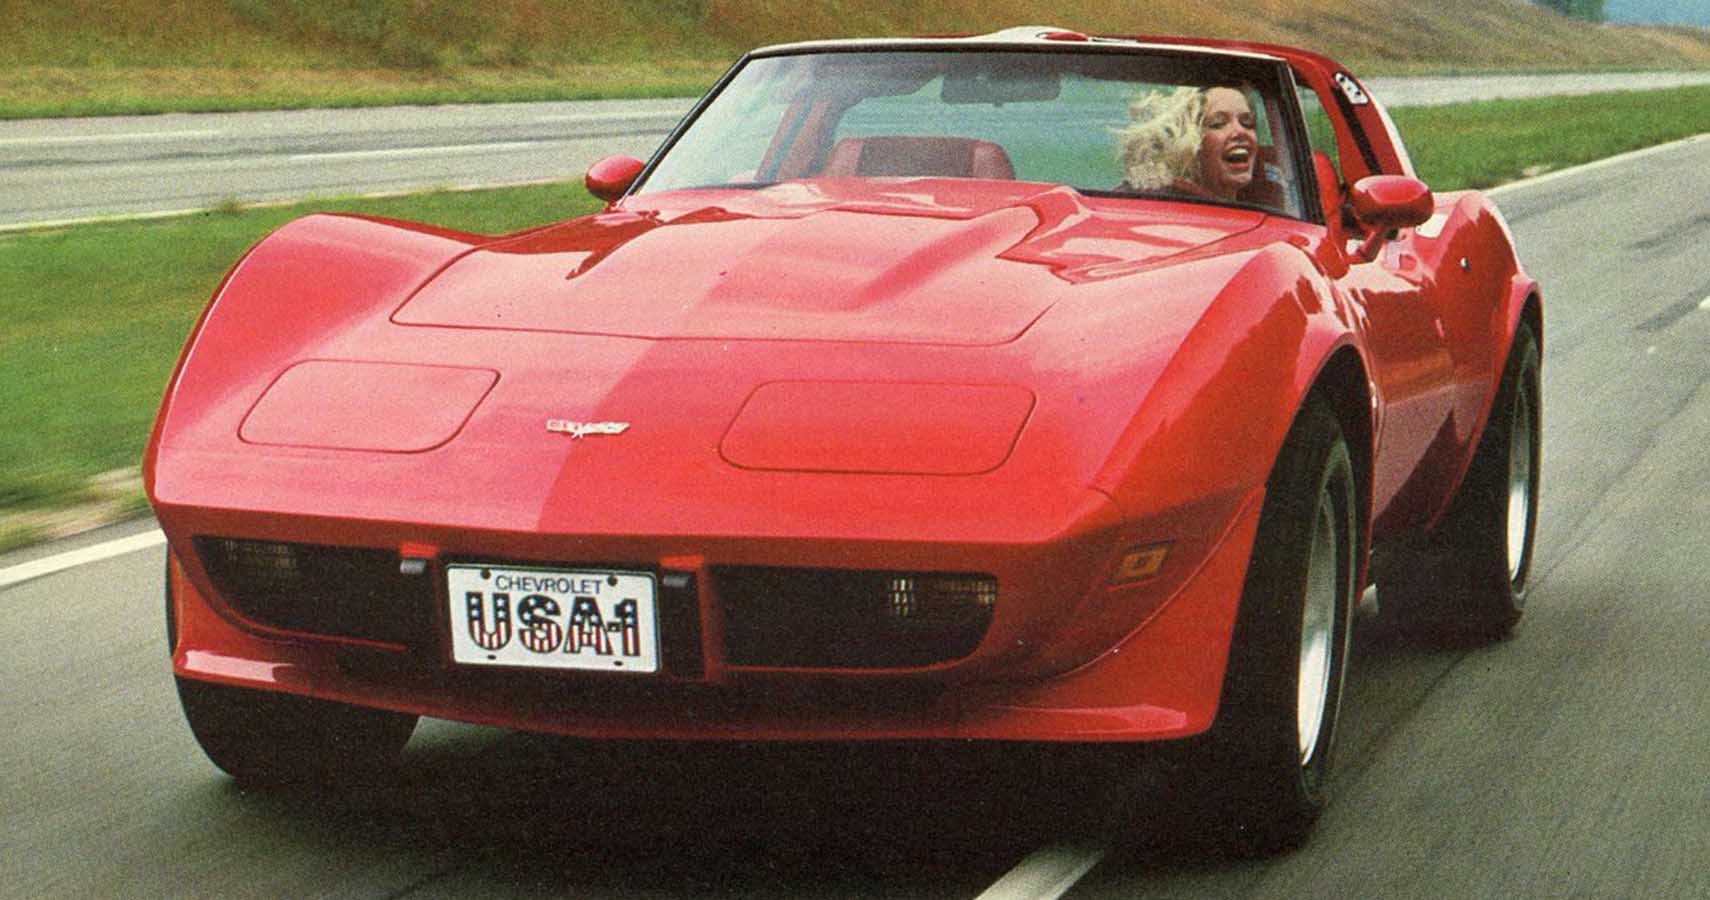 1979 Chevrolet Corvette: Far Too “Un-Special”